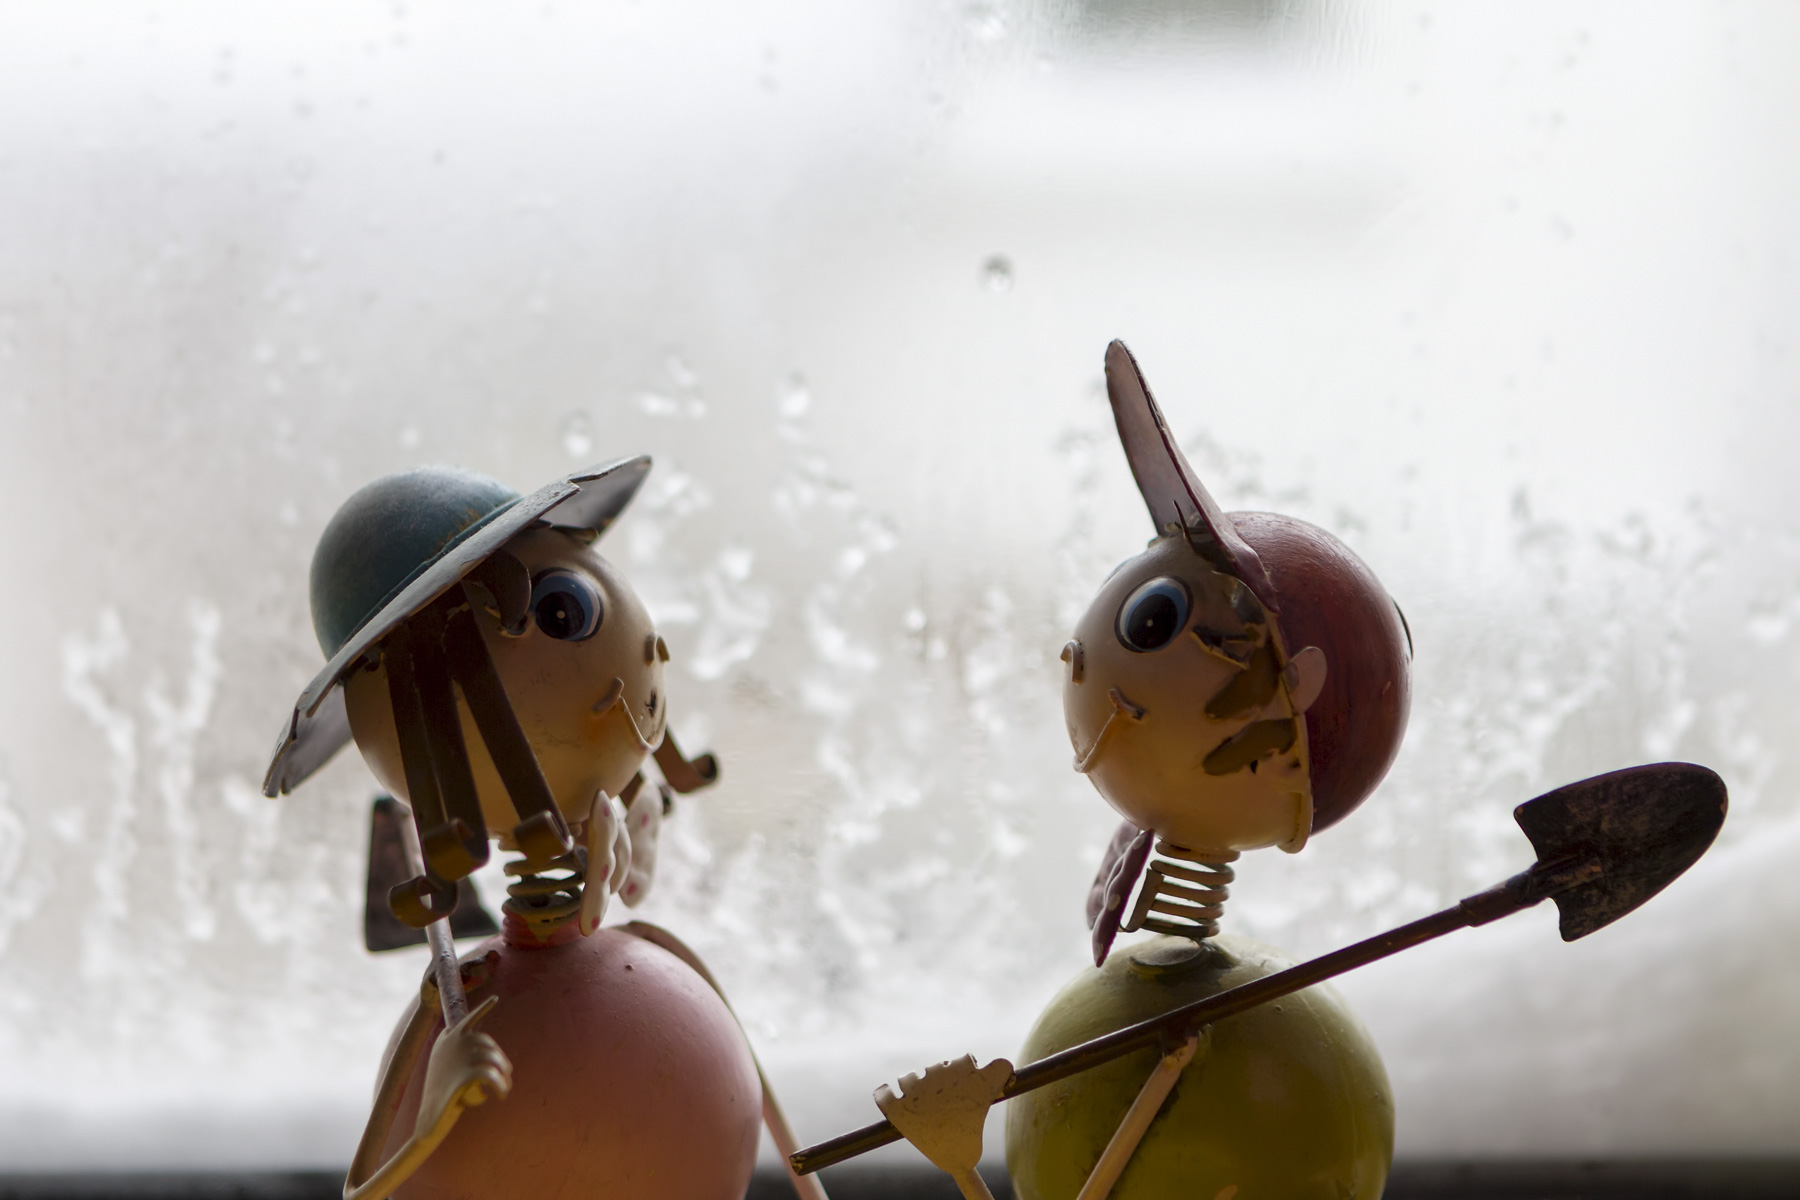 Tin figures in the window